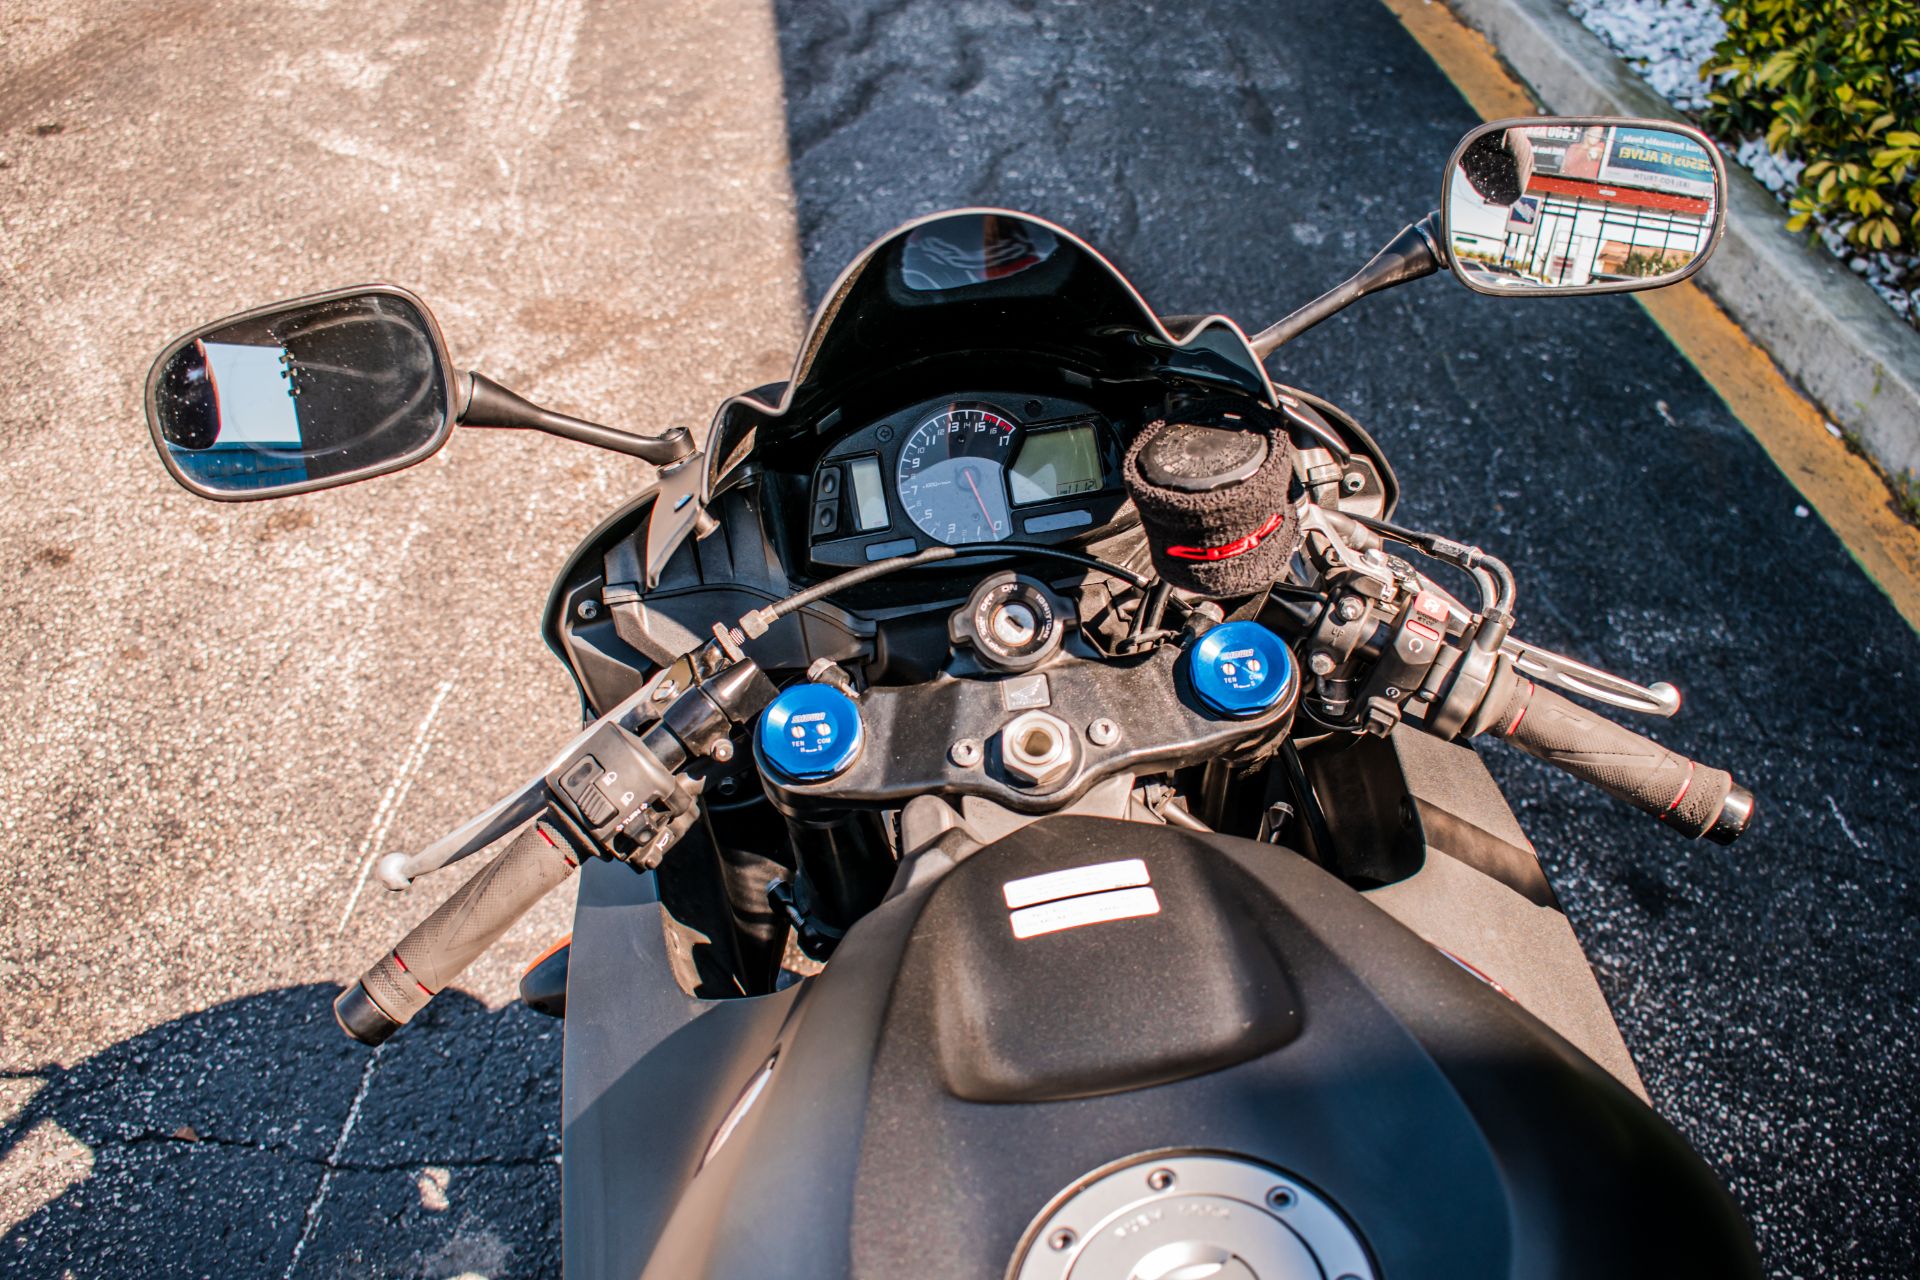 2019 Honda CBR600RR ABS in Jacksonville, Florida - Photo 21